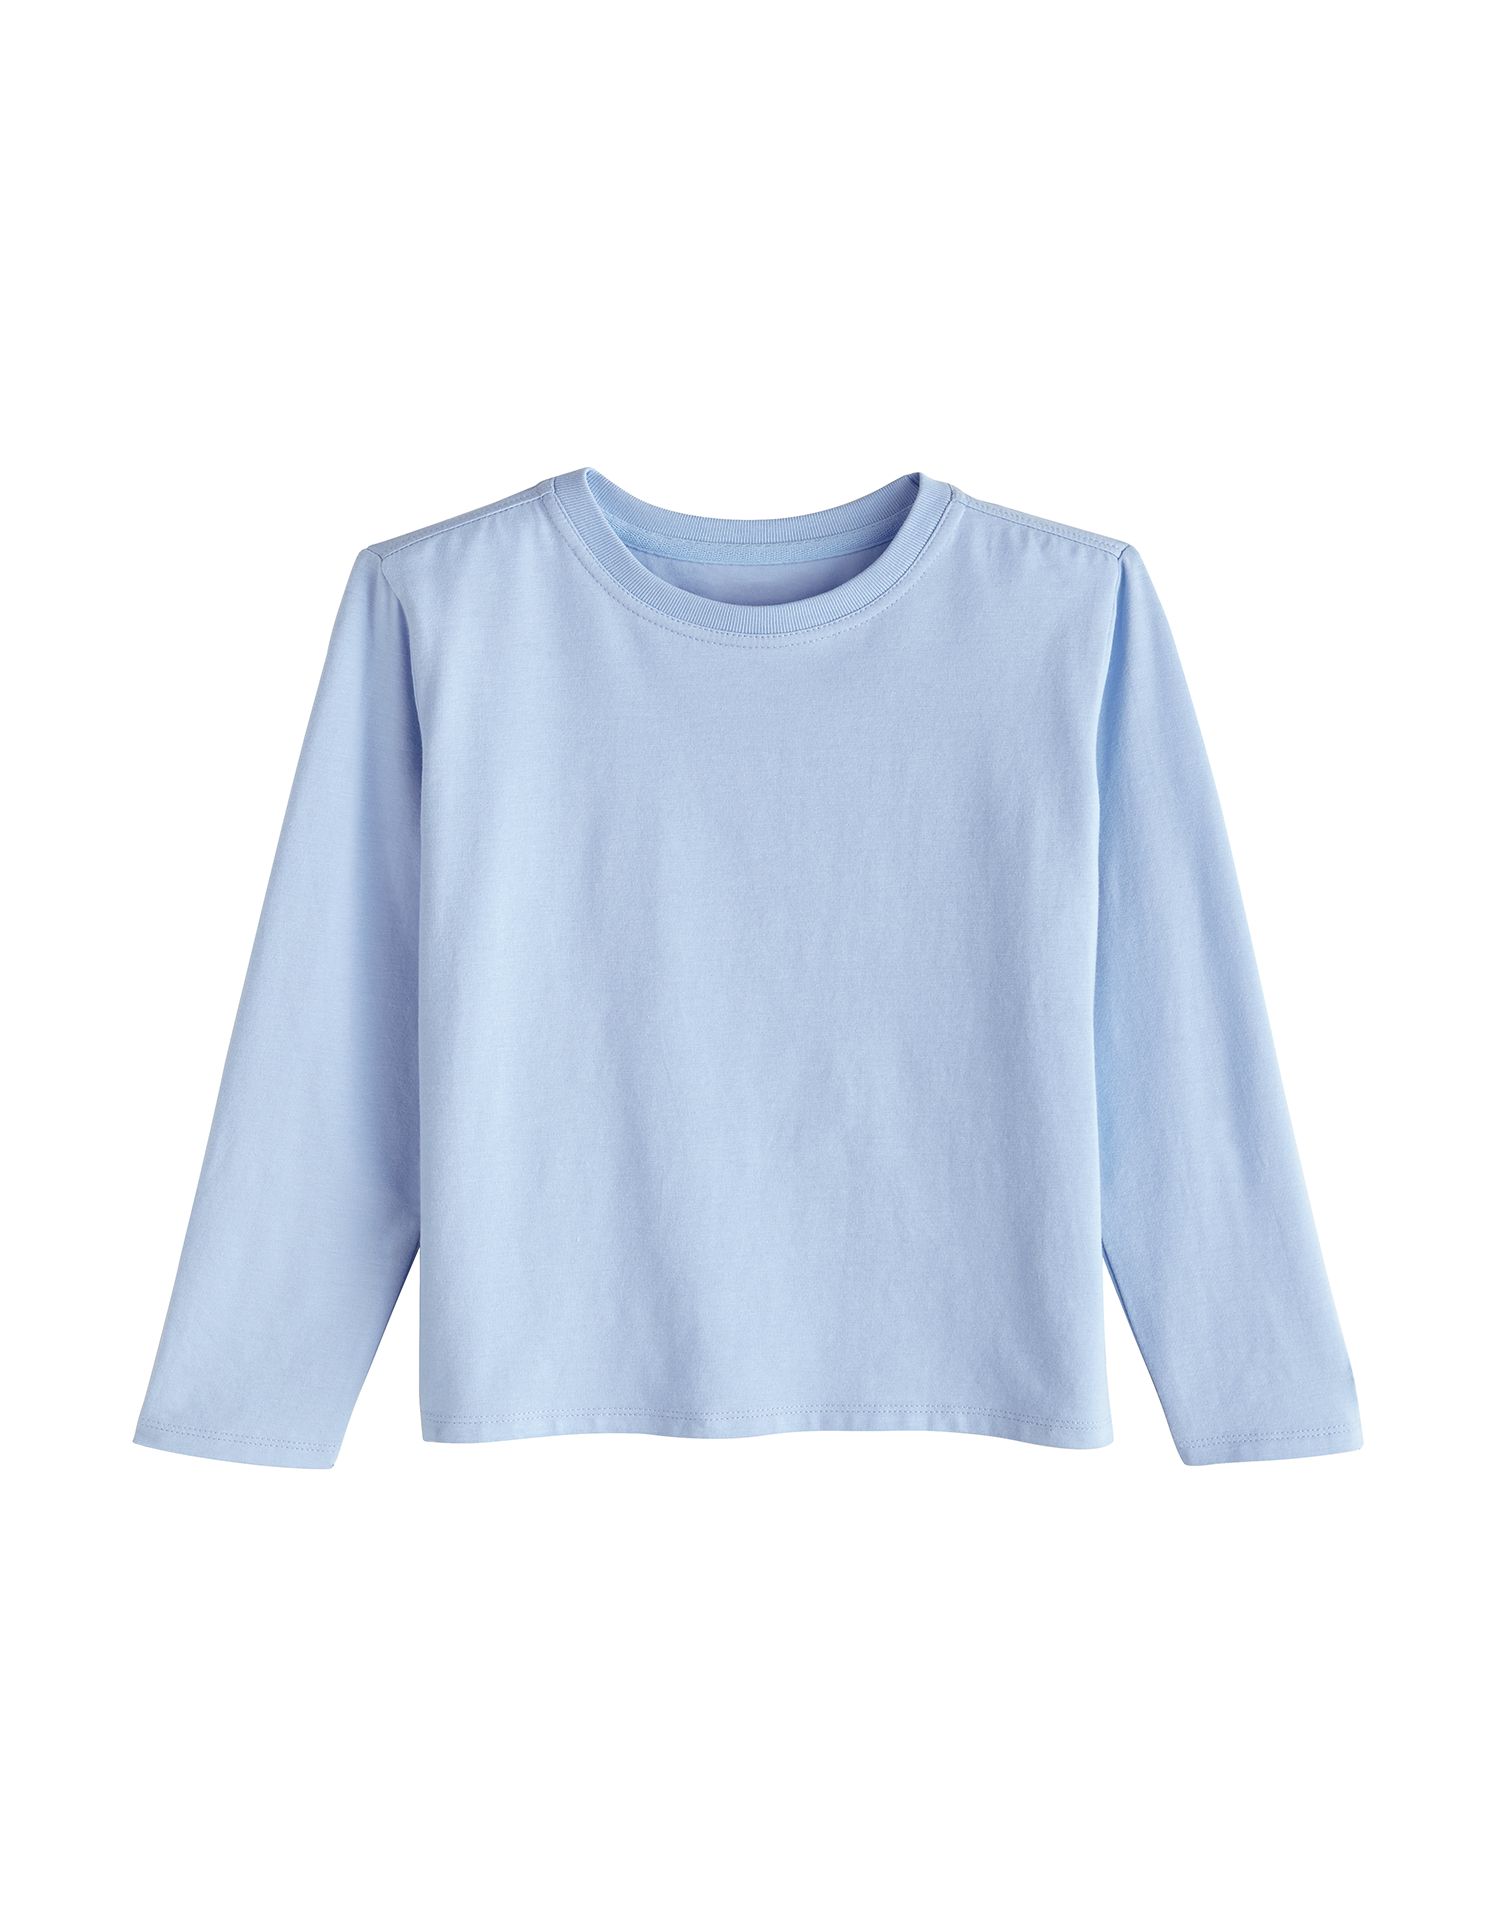 Coolibar - UV Shirt for toddlers - Longsleeve - Coco Plum - Vintage Blue